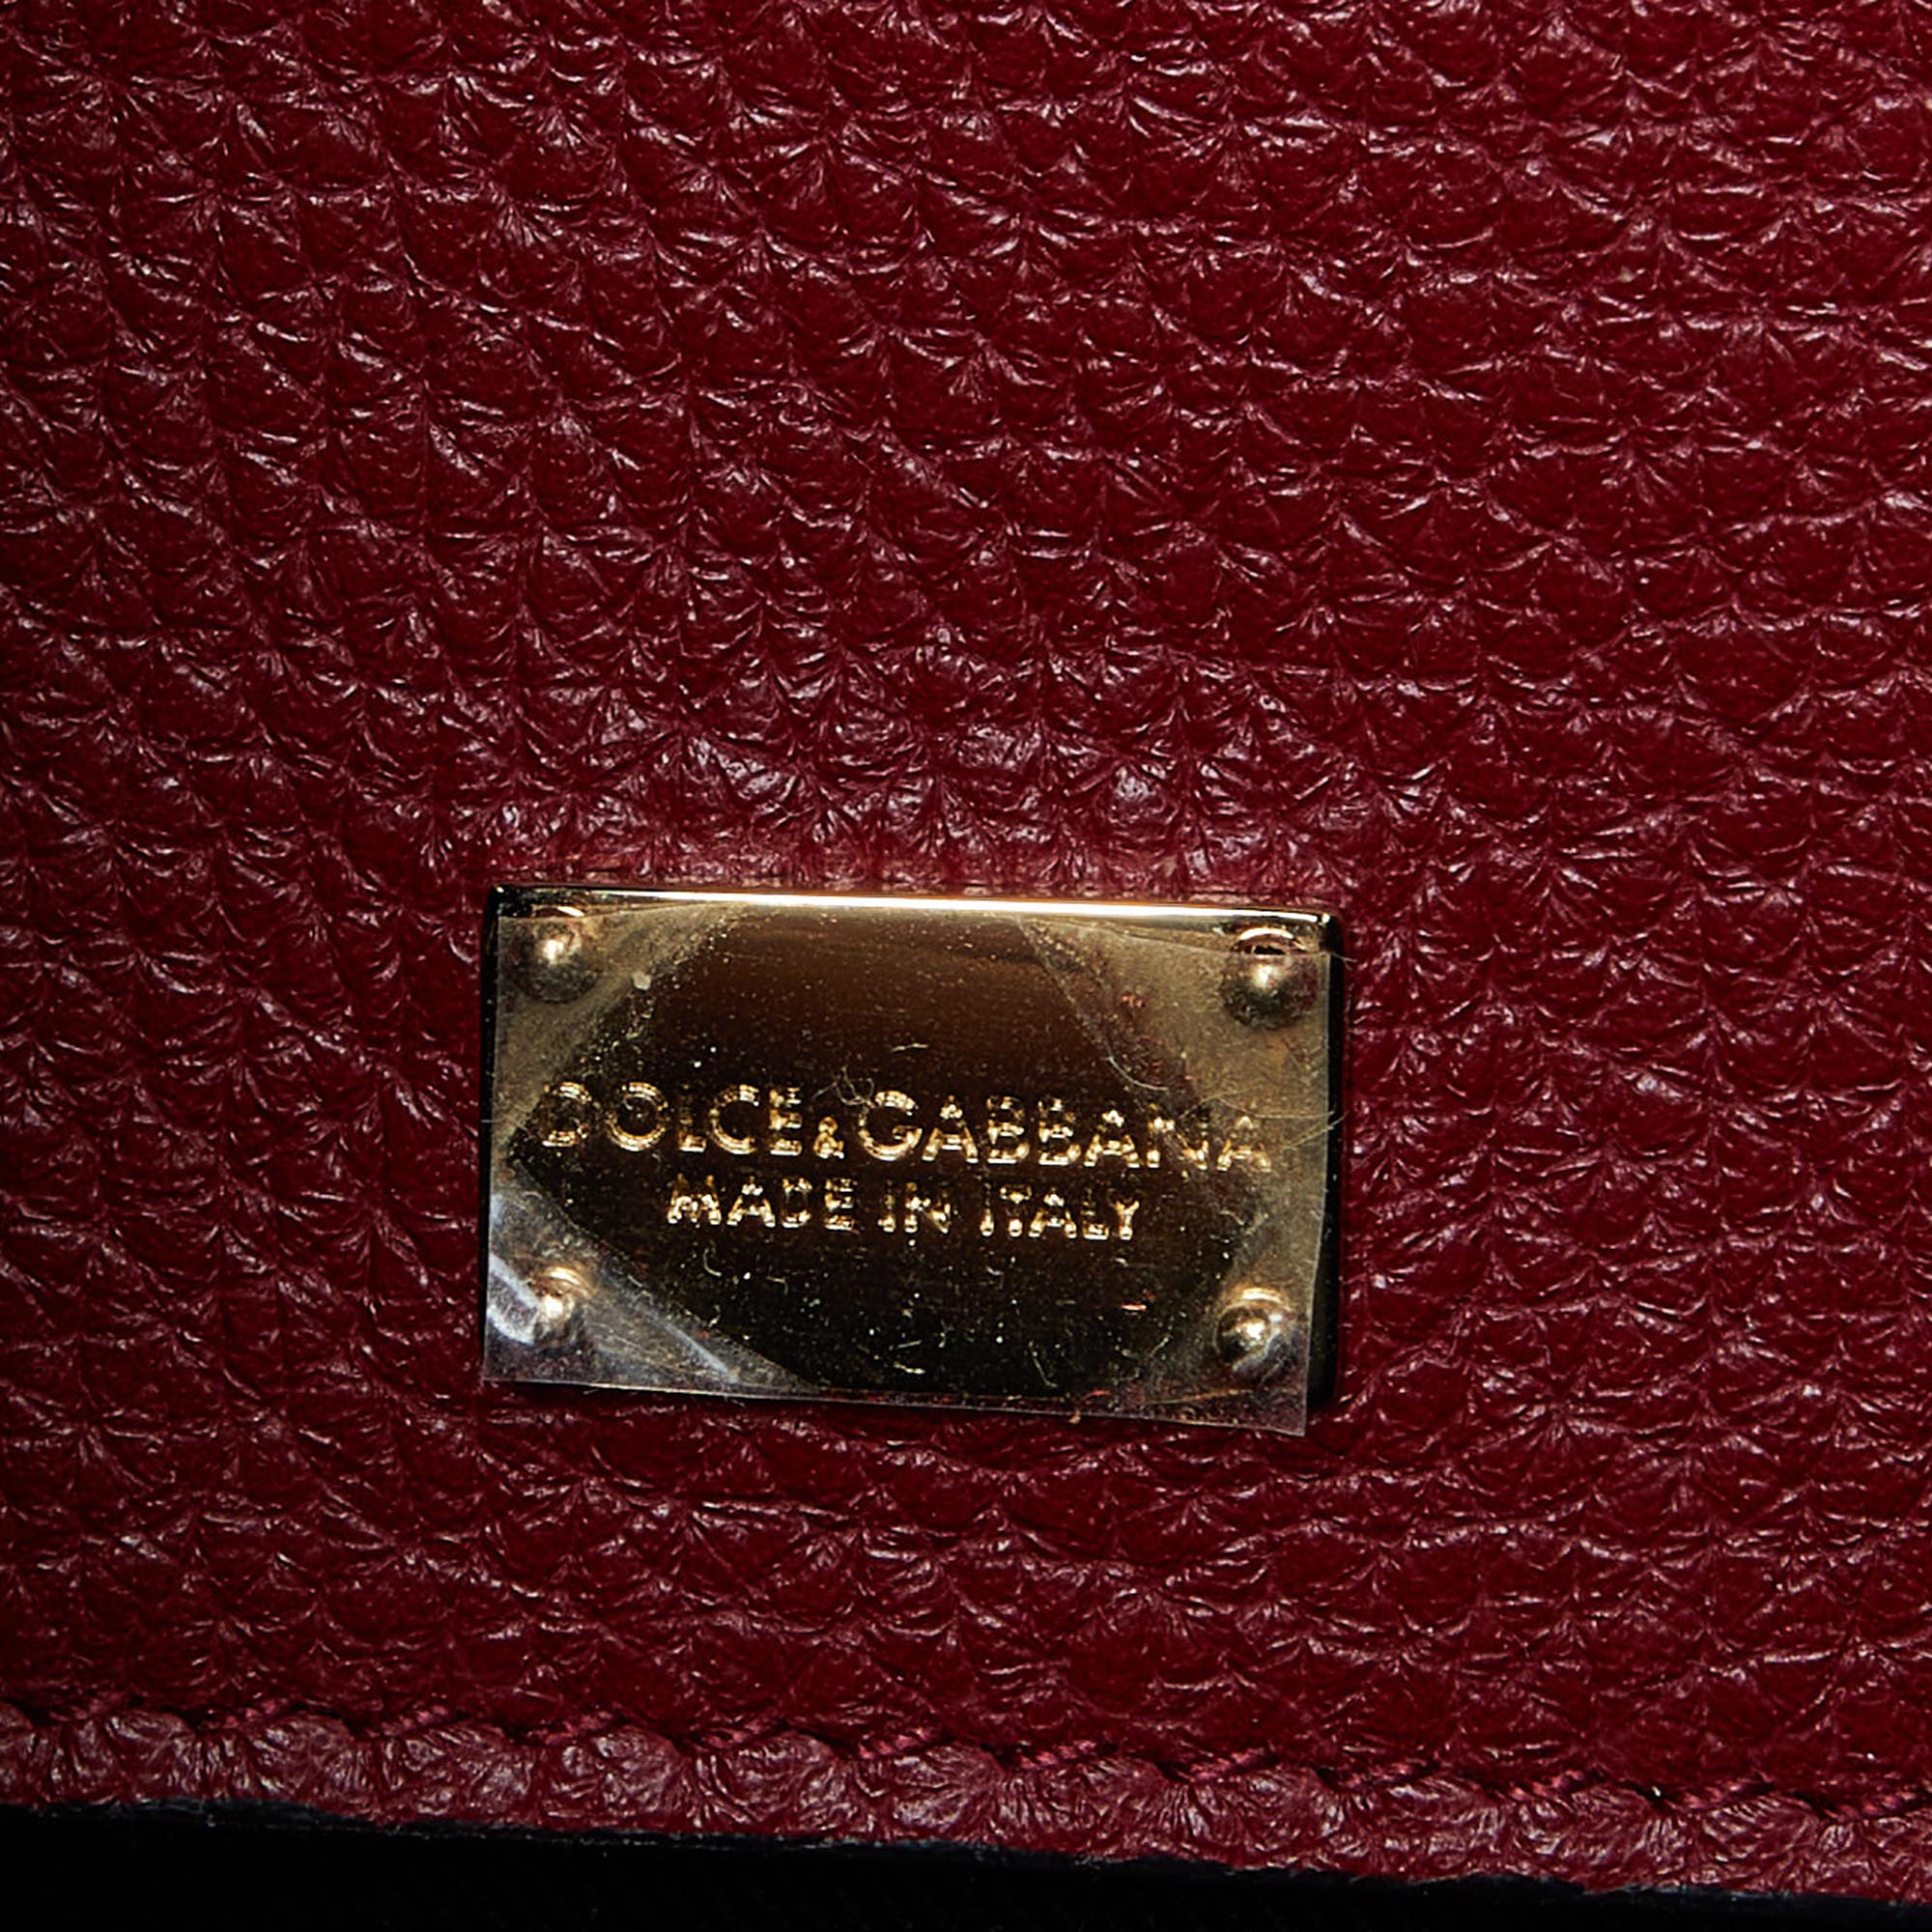 Dolce & Gabbana Red Leather Greta Top Handle Bag